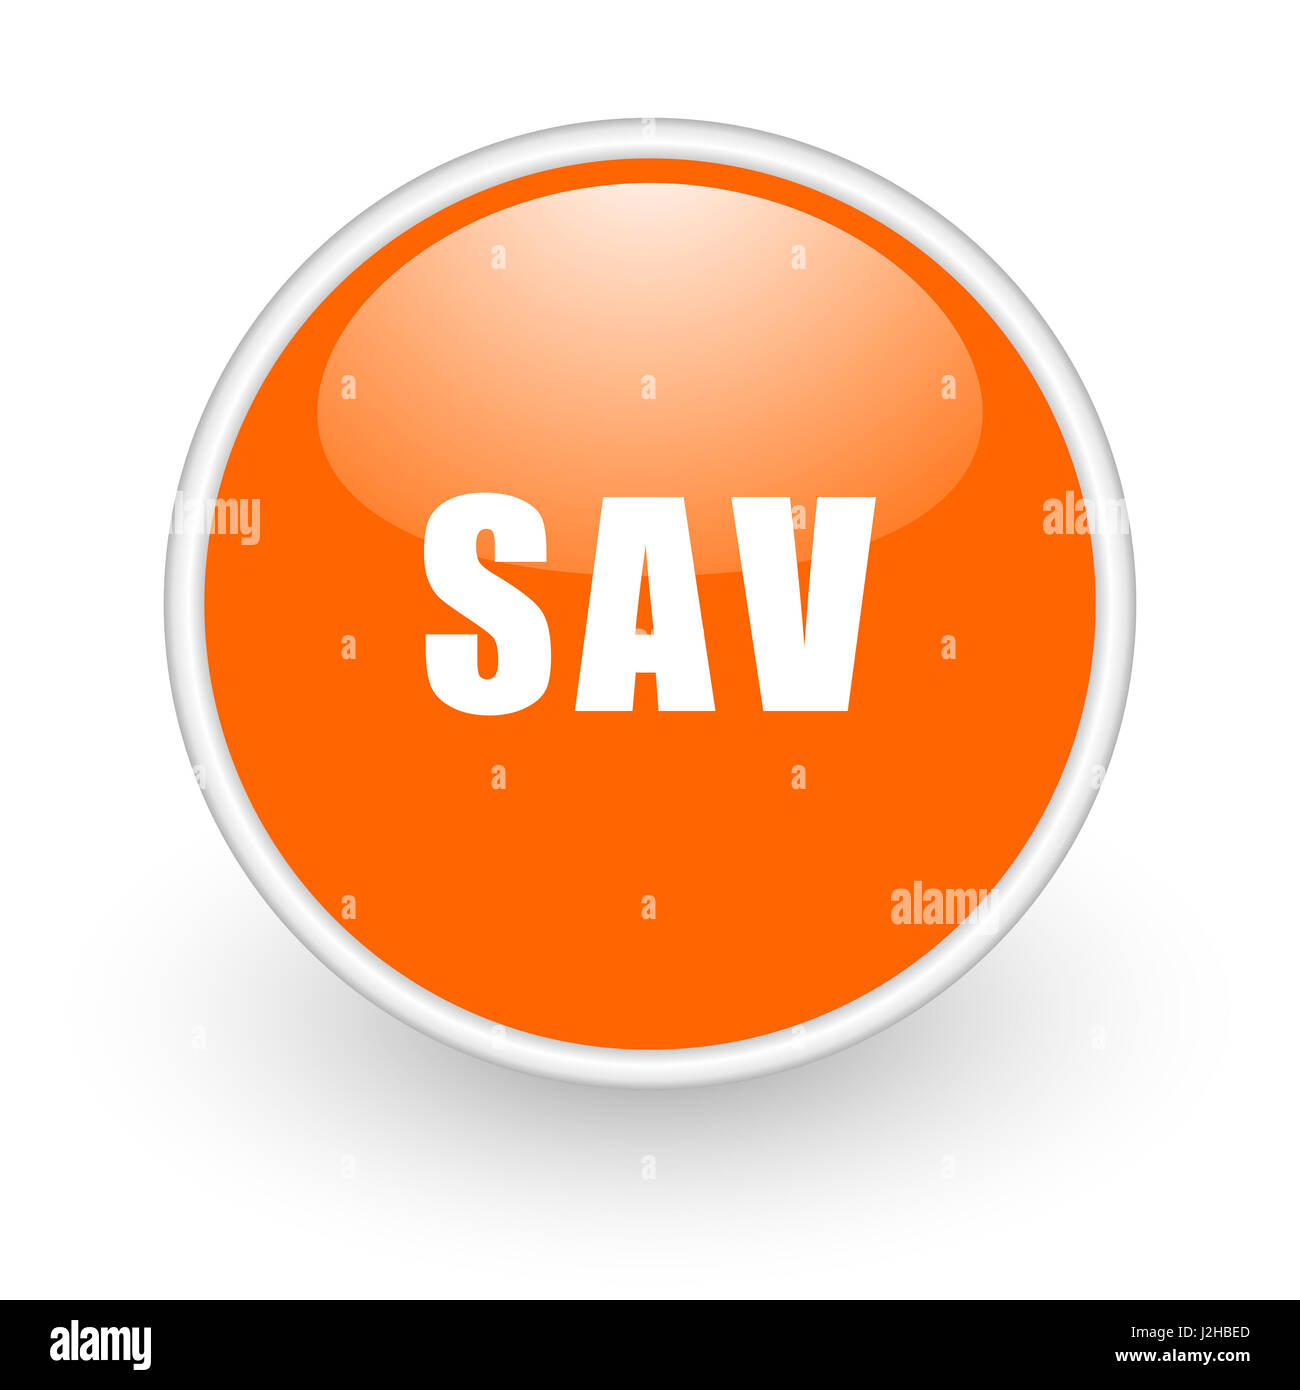 Sav modern design glossy orange web icon on white background. Stock Photo